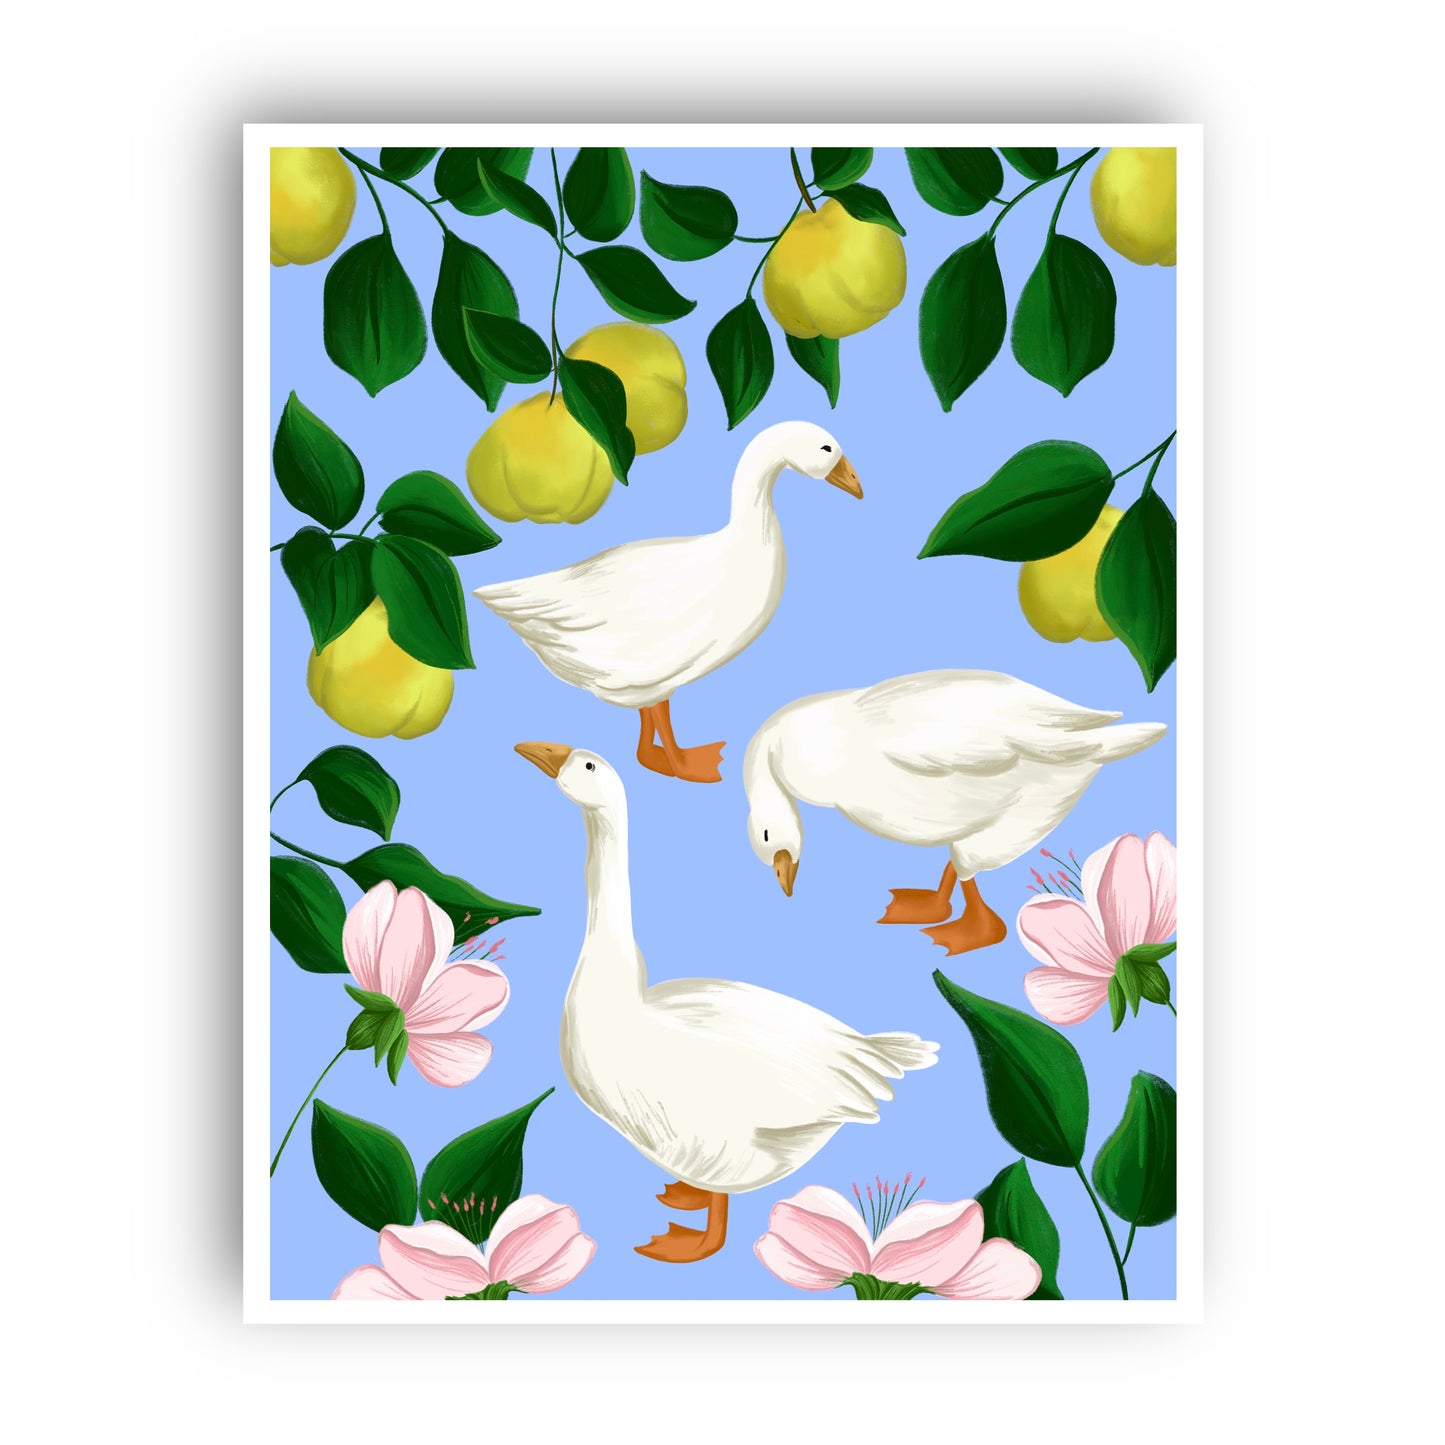 Ducks and Pears Wall Art Print